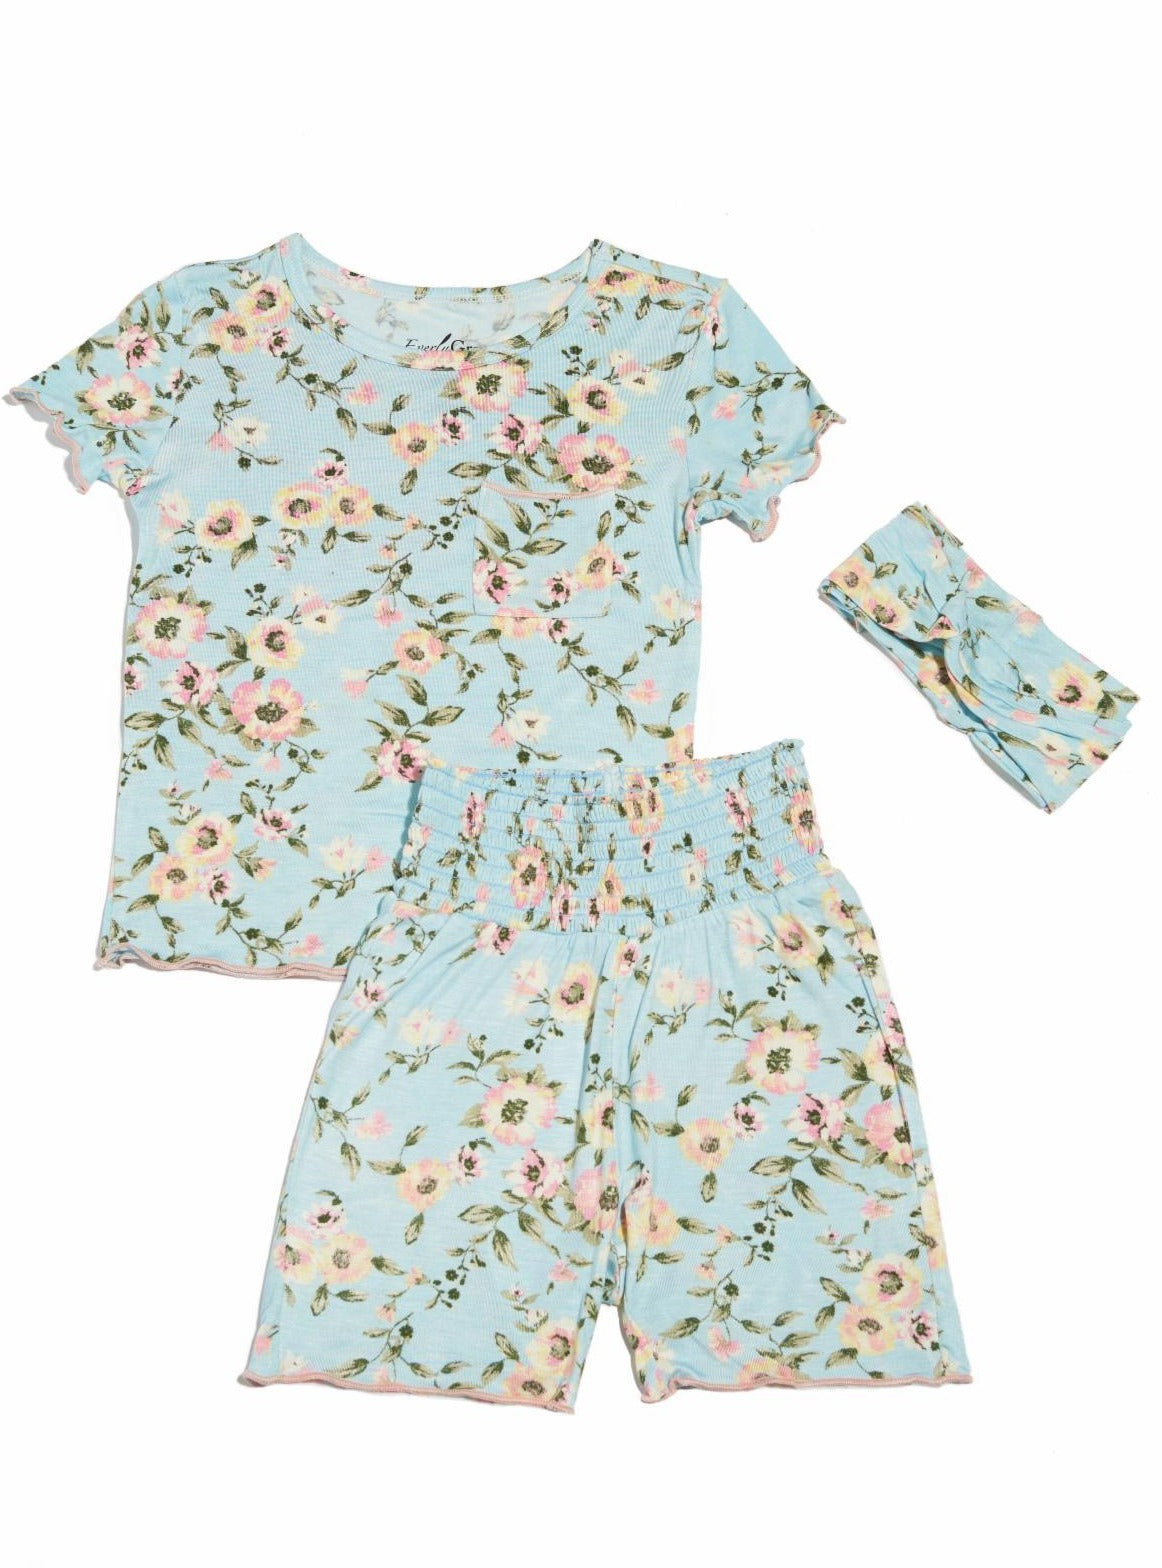 Bella Three Piece Pajamas in Cloud Blue  - Doodlebug's Children's Boutique